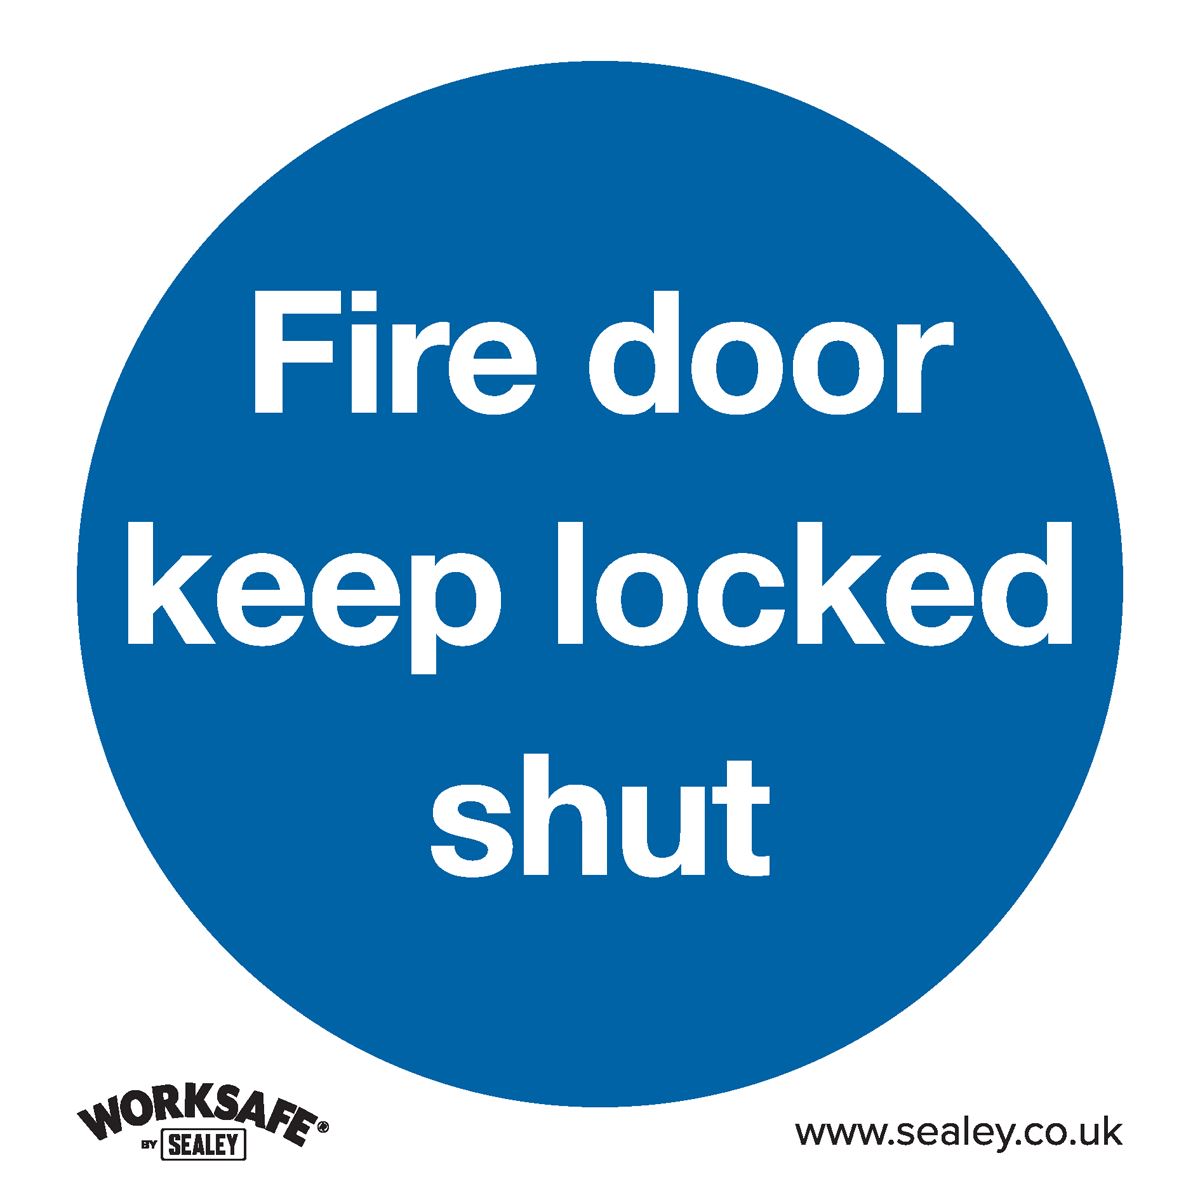 Worksafe by Sealey Mandatory Safety Sign - Fire Door Keep Locked Shut - Self-Adhesive Vinyl